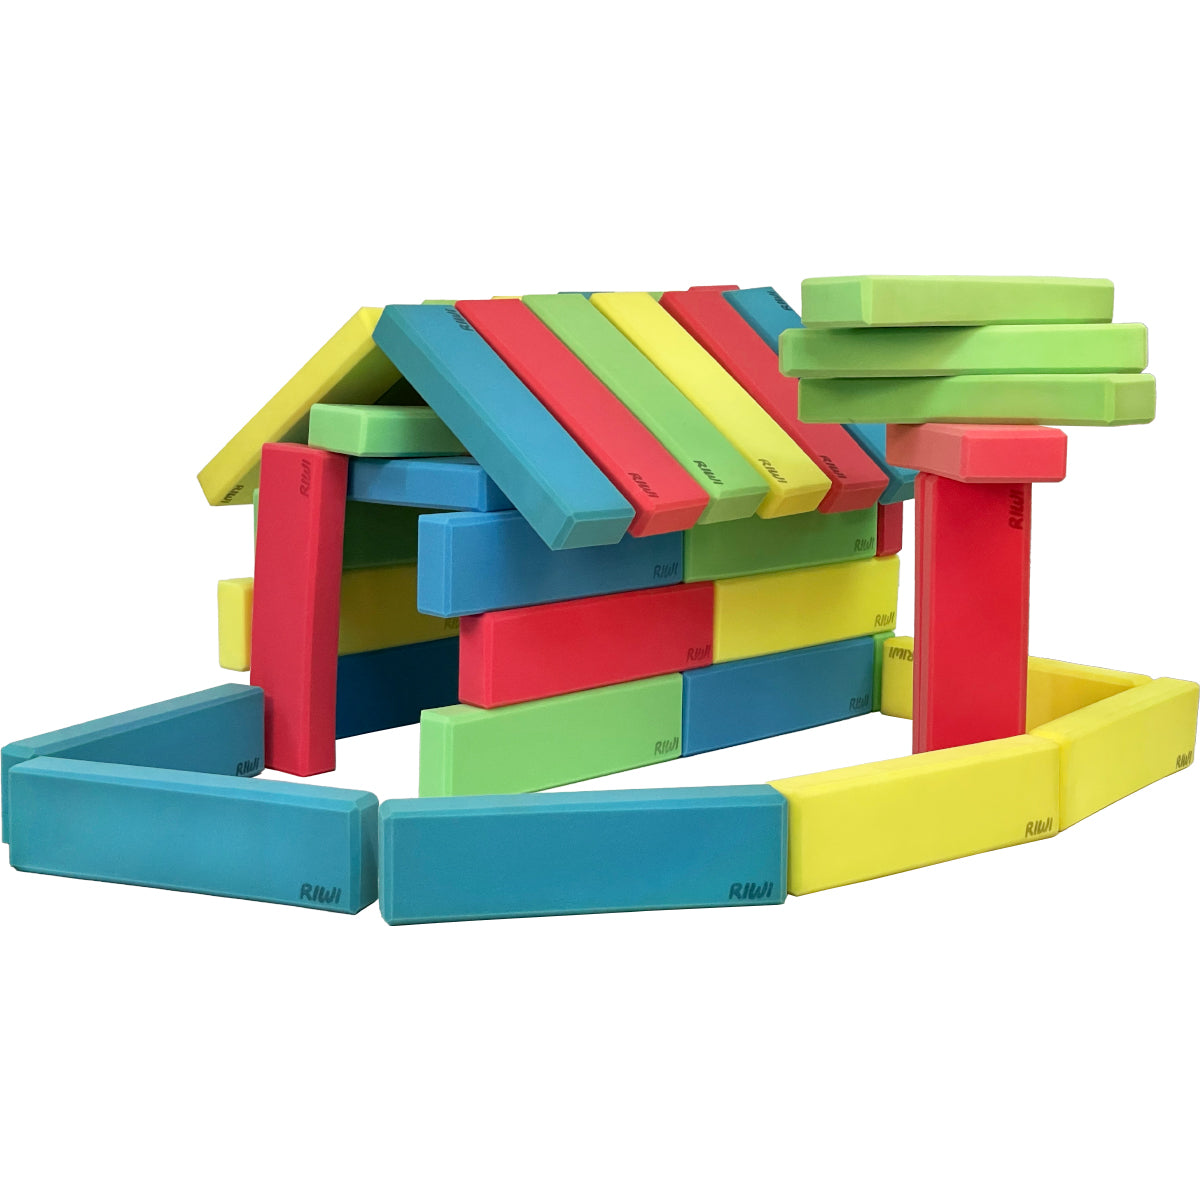 Introducing RIWI Building Blocks! XXL soft foam blocks – RIWI